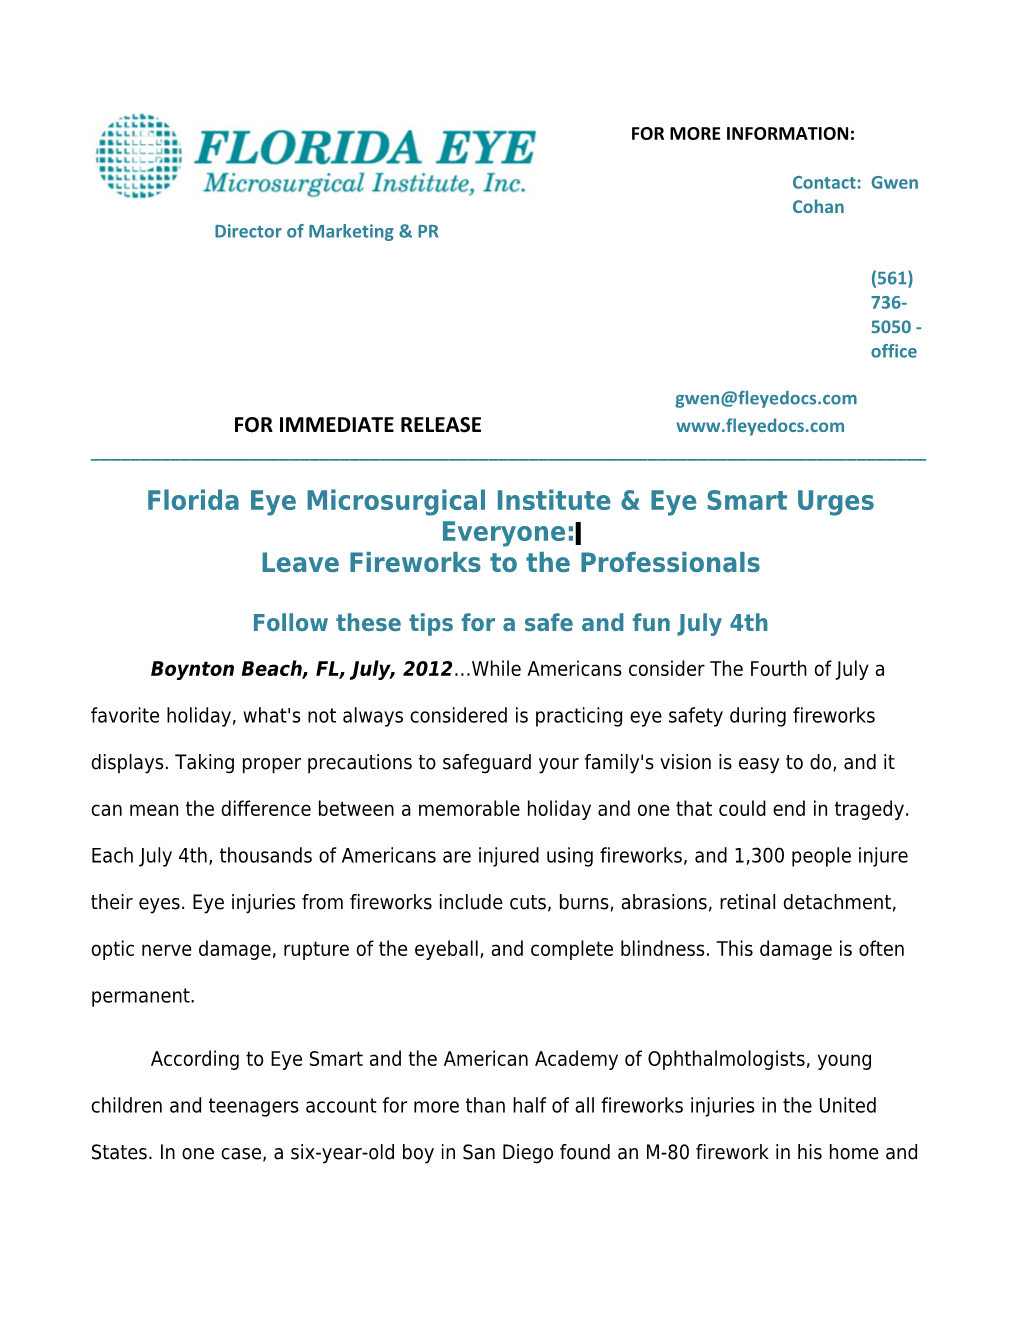 Florida Eye Microsurgical Institute & Eye Smart Urges Everyone